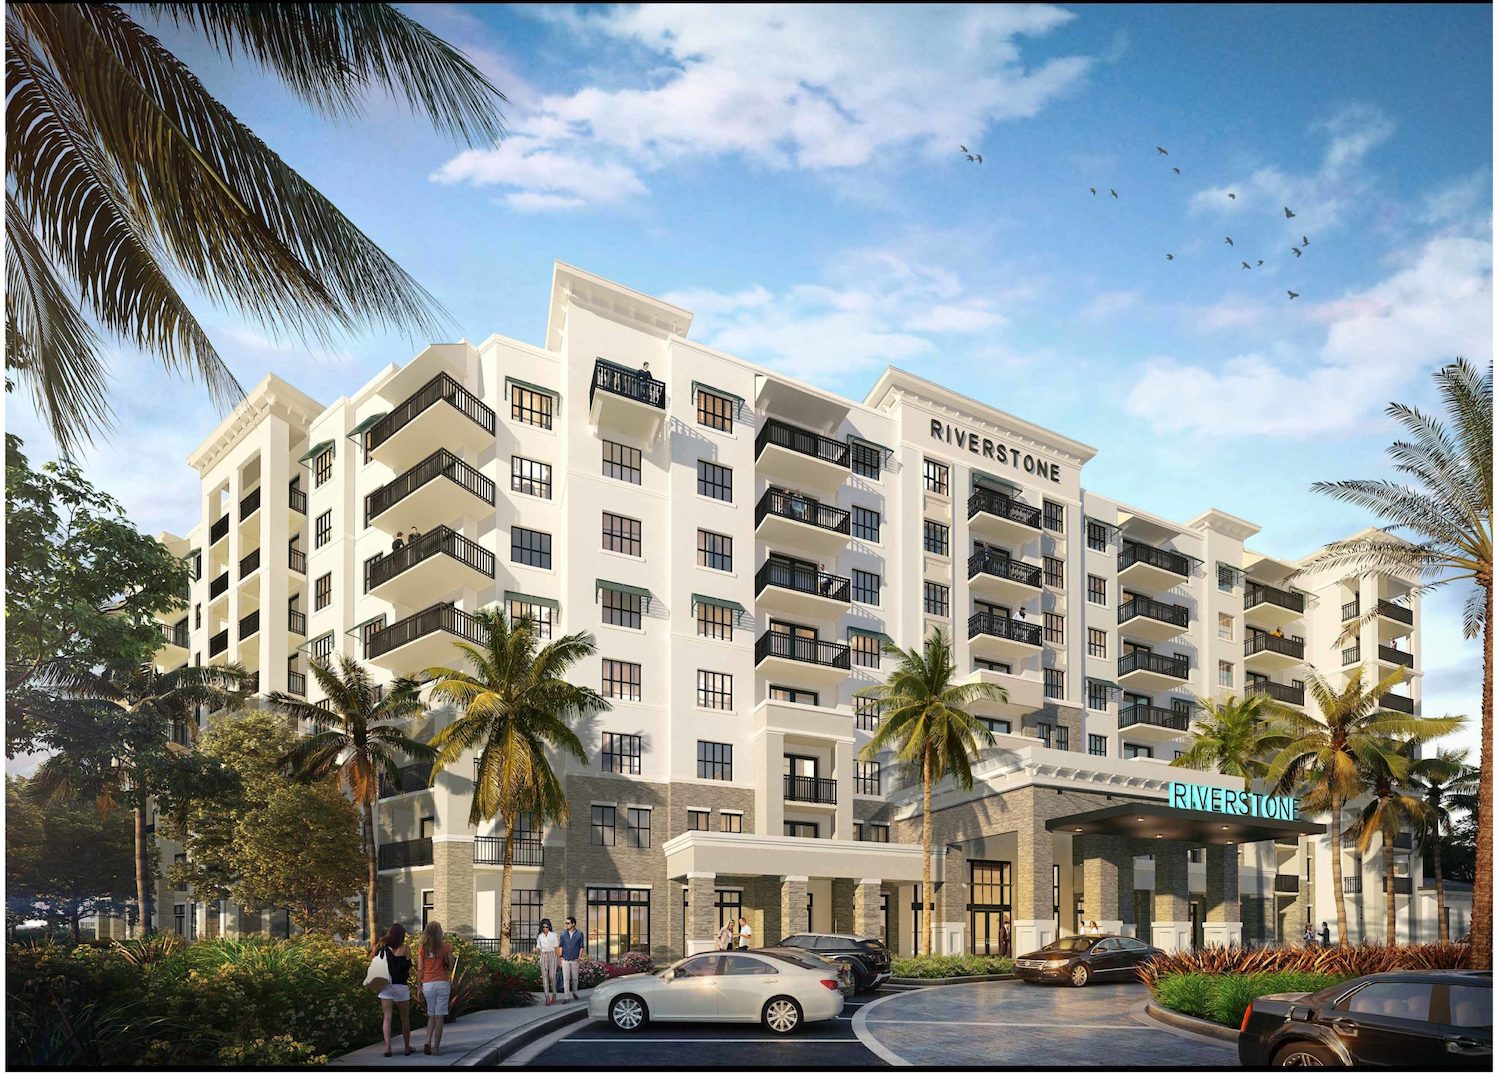 Ec0-friendly Apartment Rentals In West Palm Beach